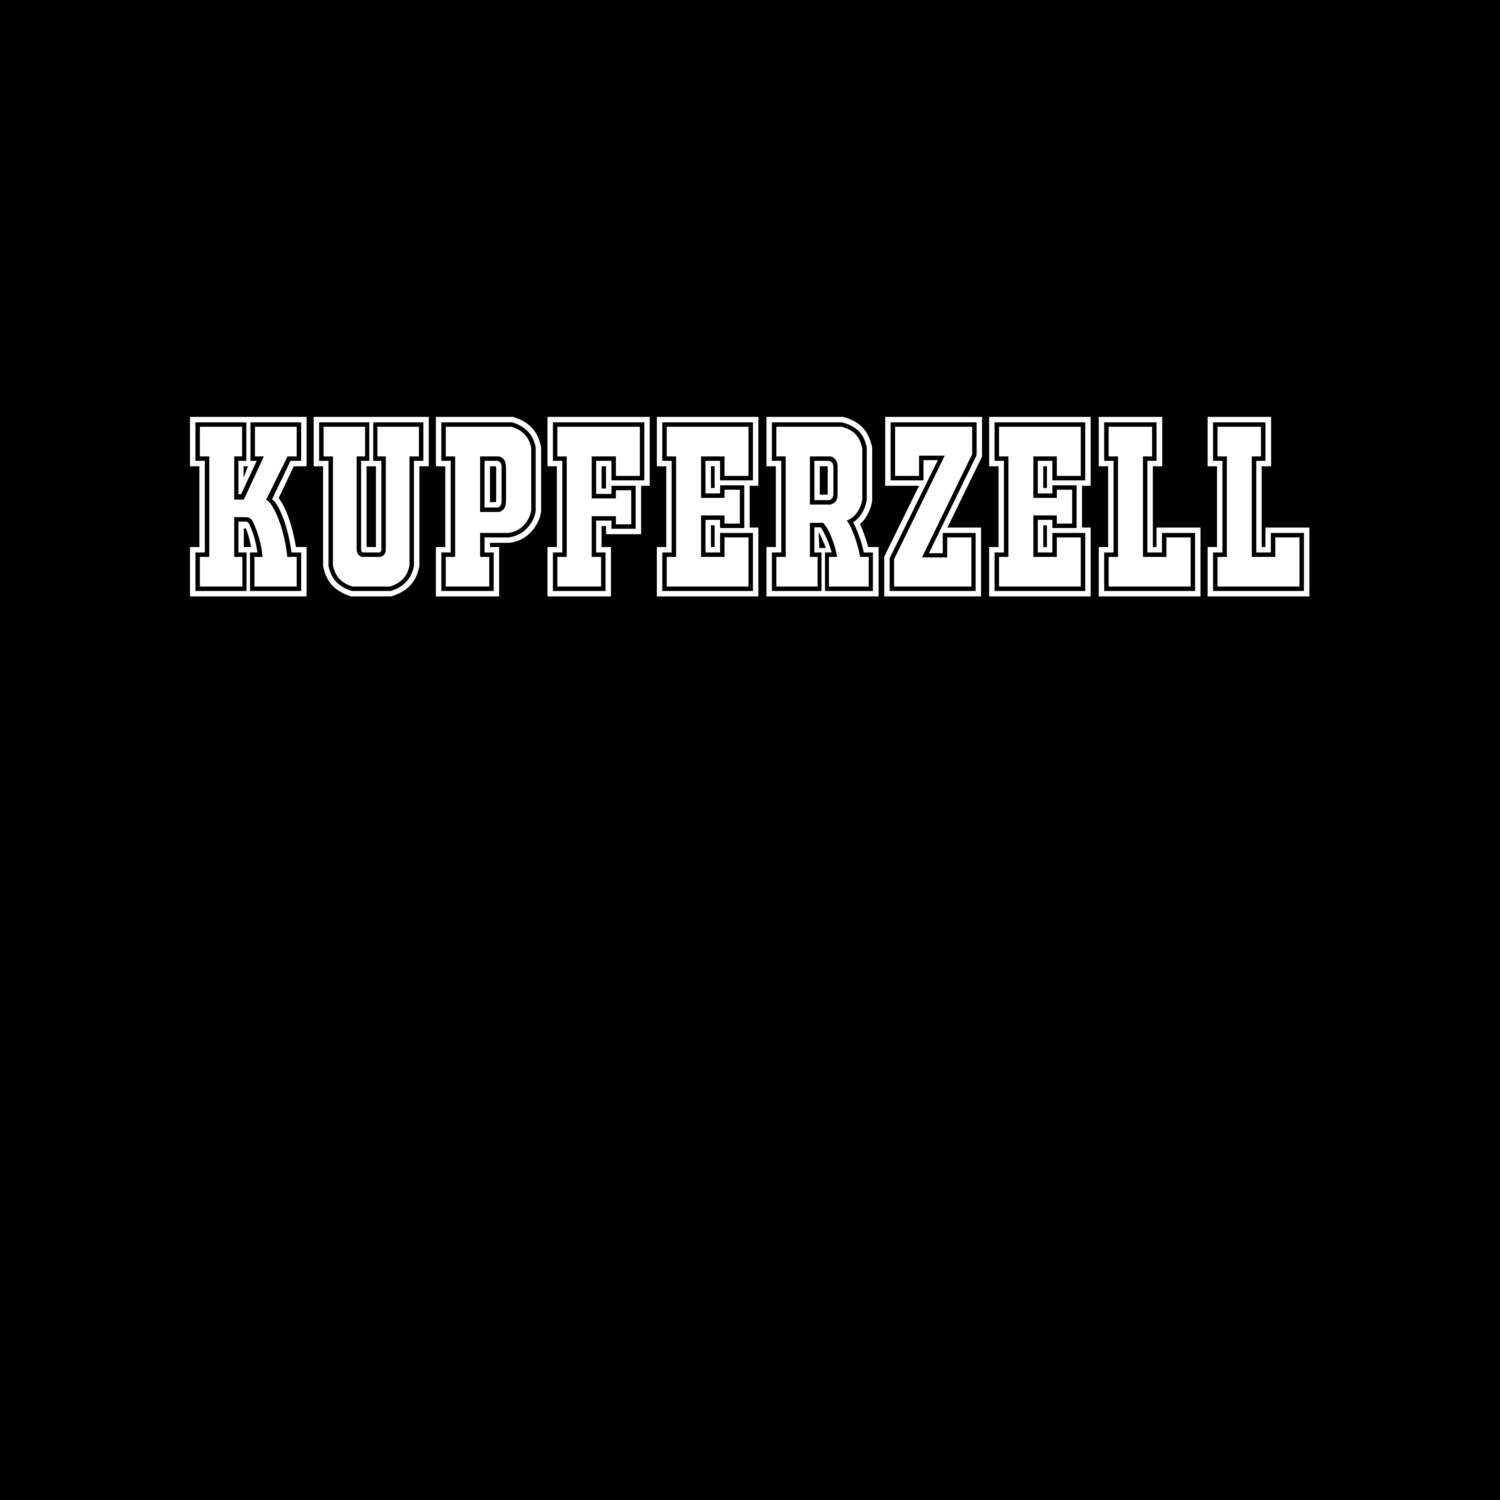 Kupferzell T-Shirt »Classic«